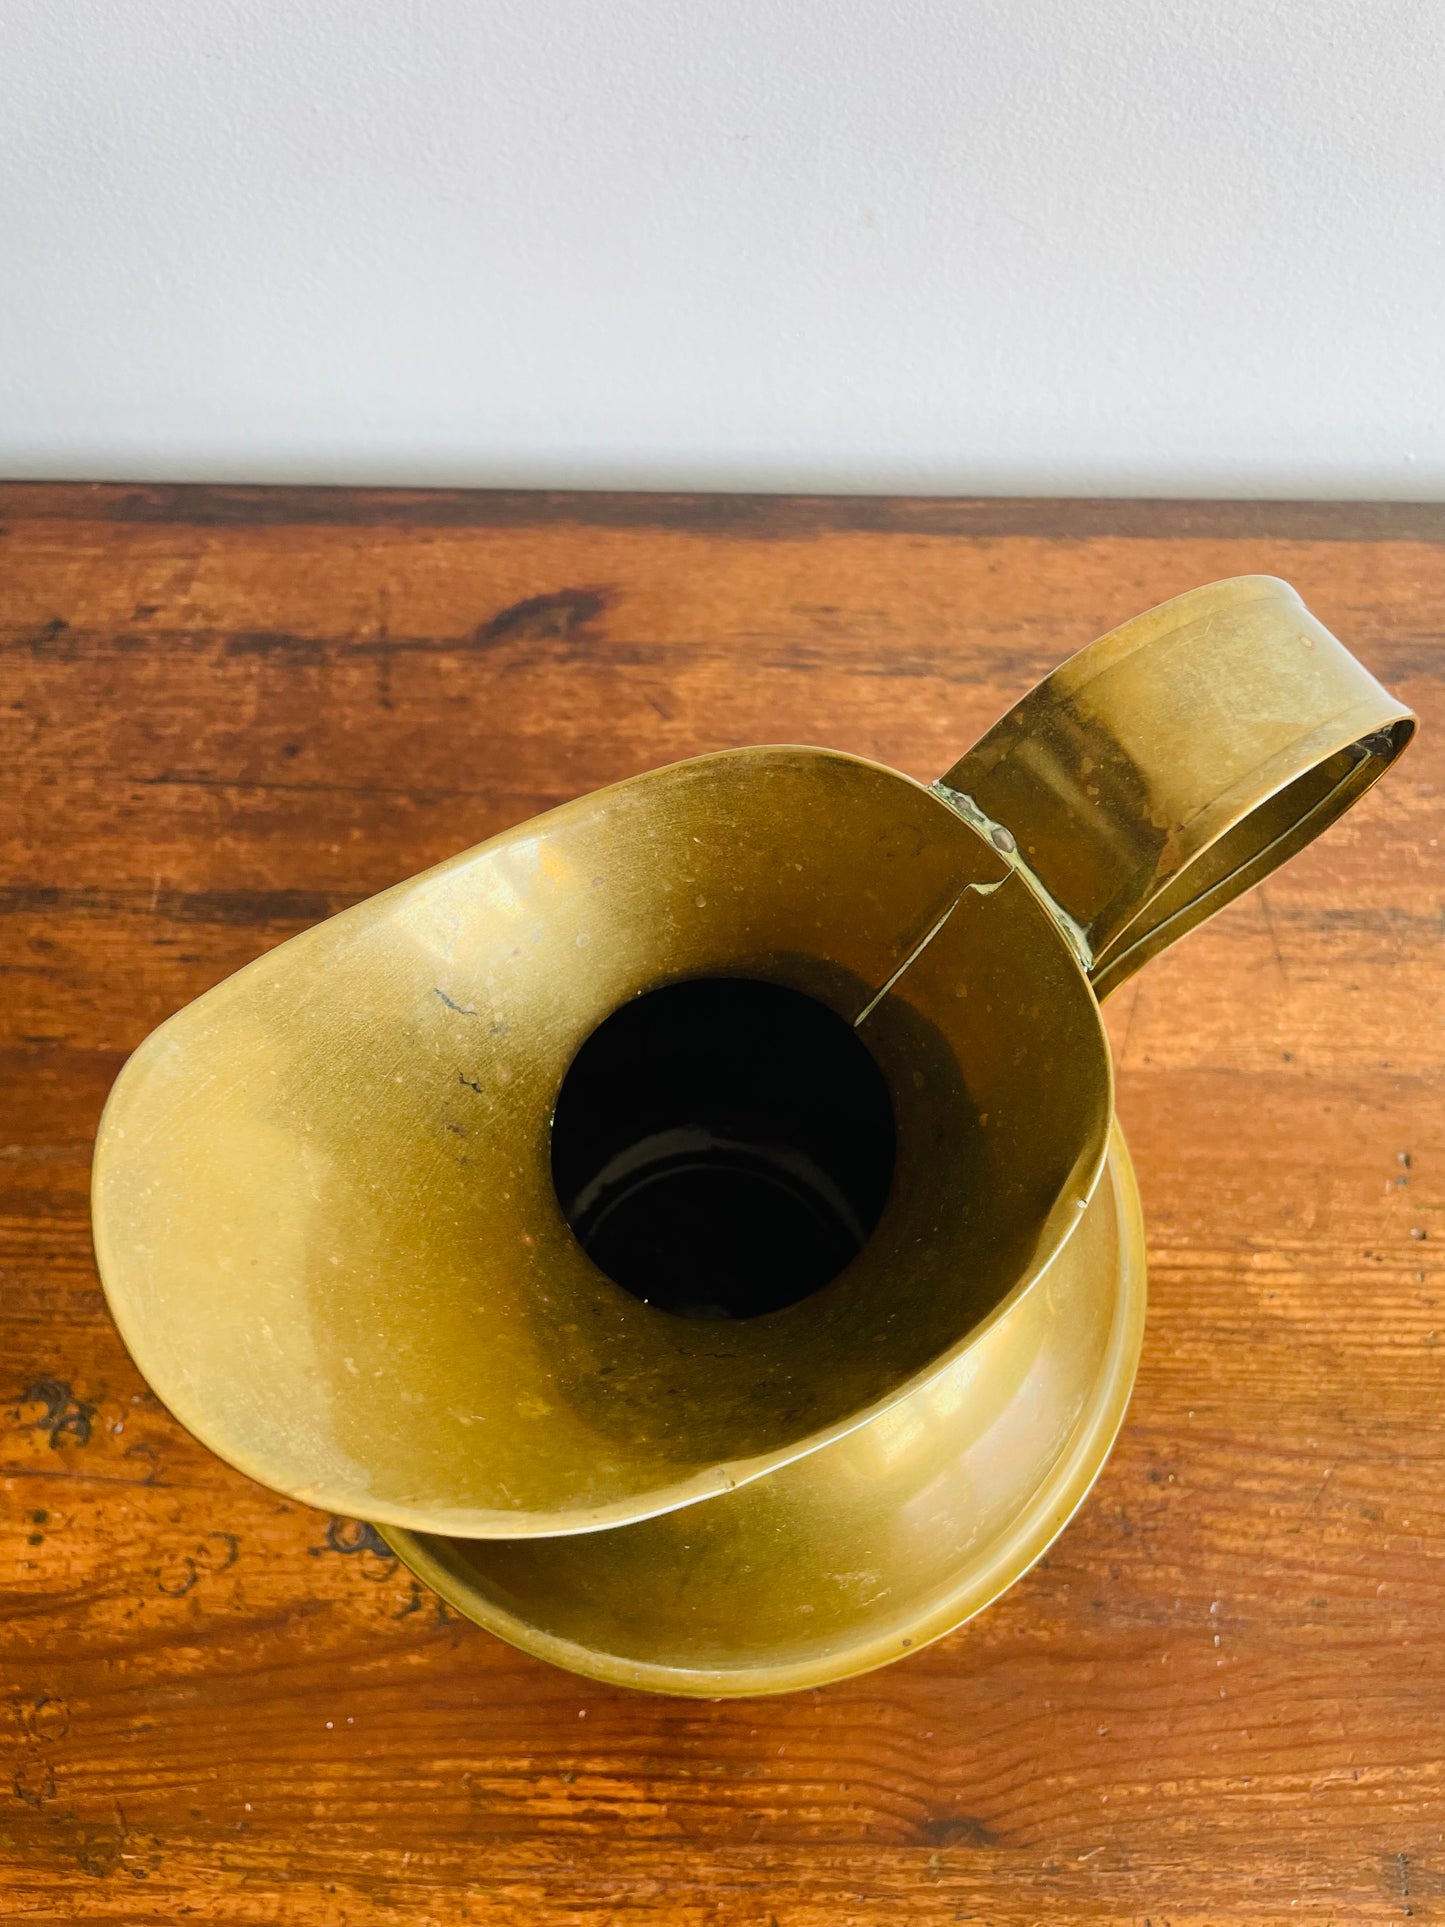 Copper & Brass Pitcher Jug Vase - Made in England